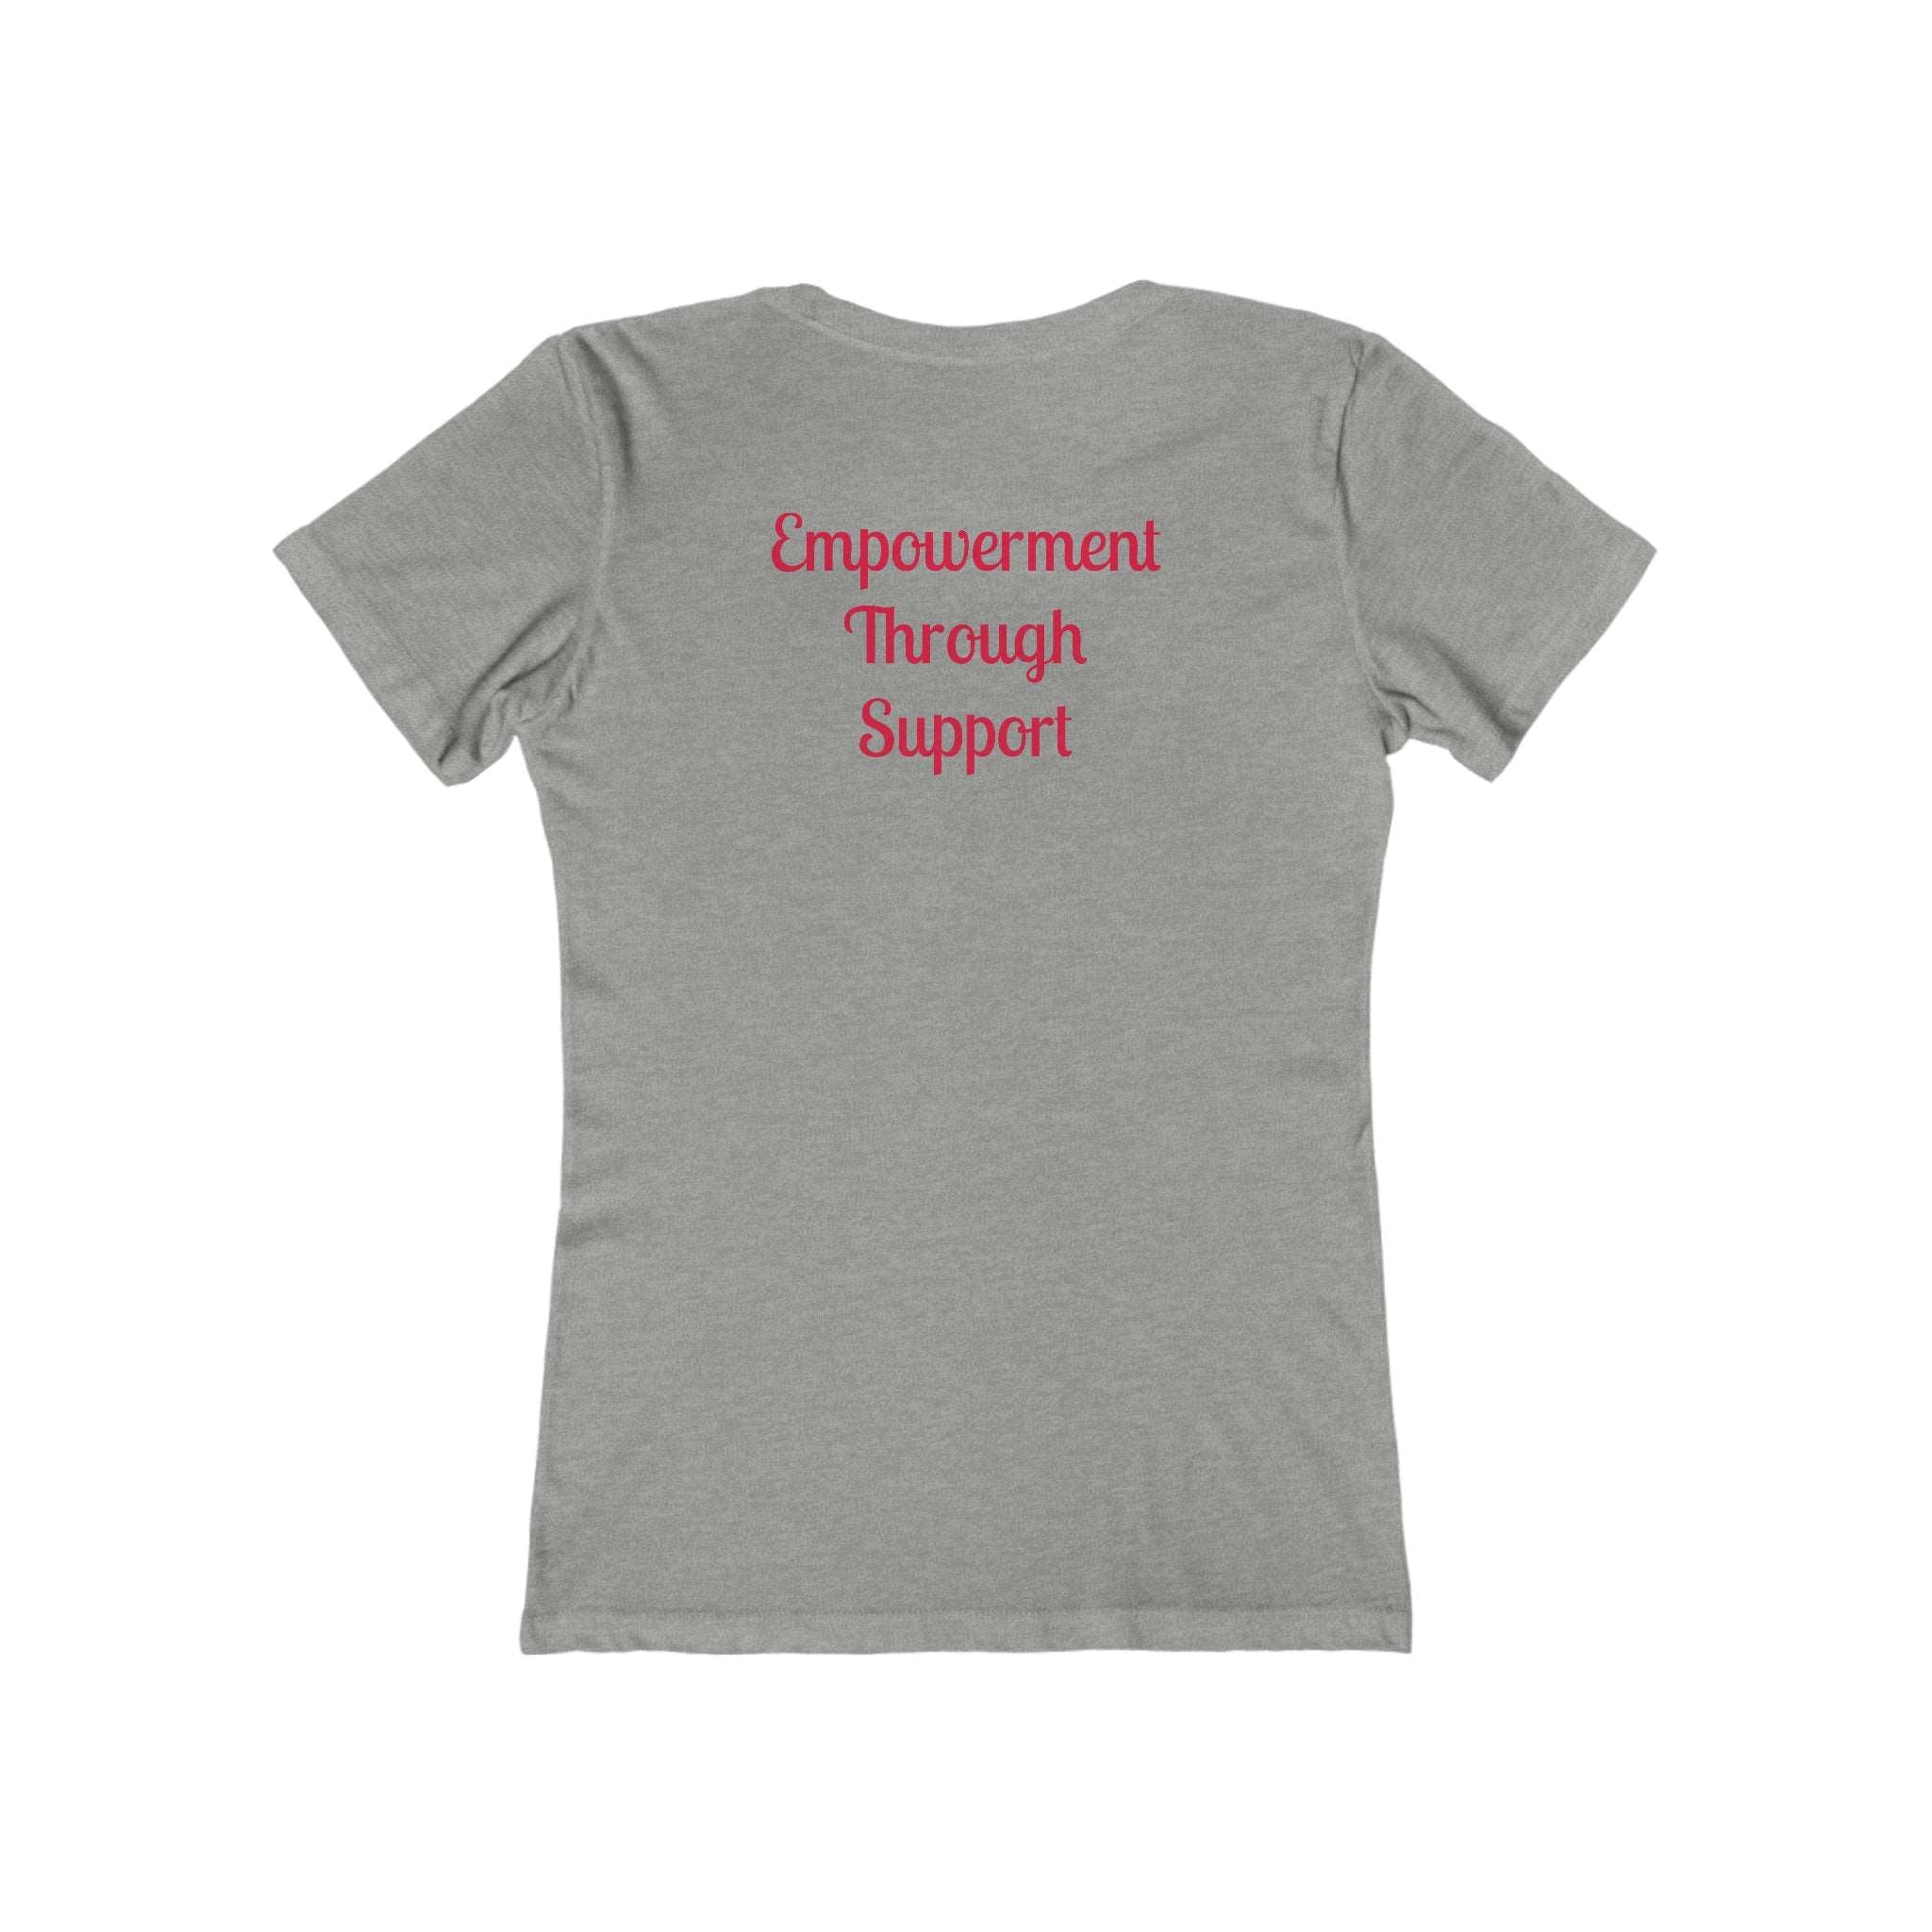 Empowerment Through Support Boyfriend Tee Heather Grey Awareness Break the Stigma Mental Health Support Pledge Donation slim fit shirt Tee women shirt T-Shirt 2035251855568059473_2048_b28c8a37-abba-4f3b-b8f9-ae9535c821ed Printify